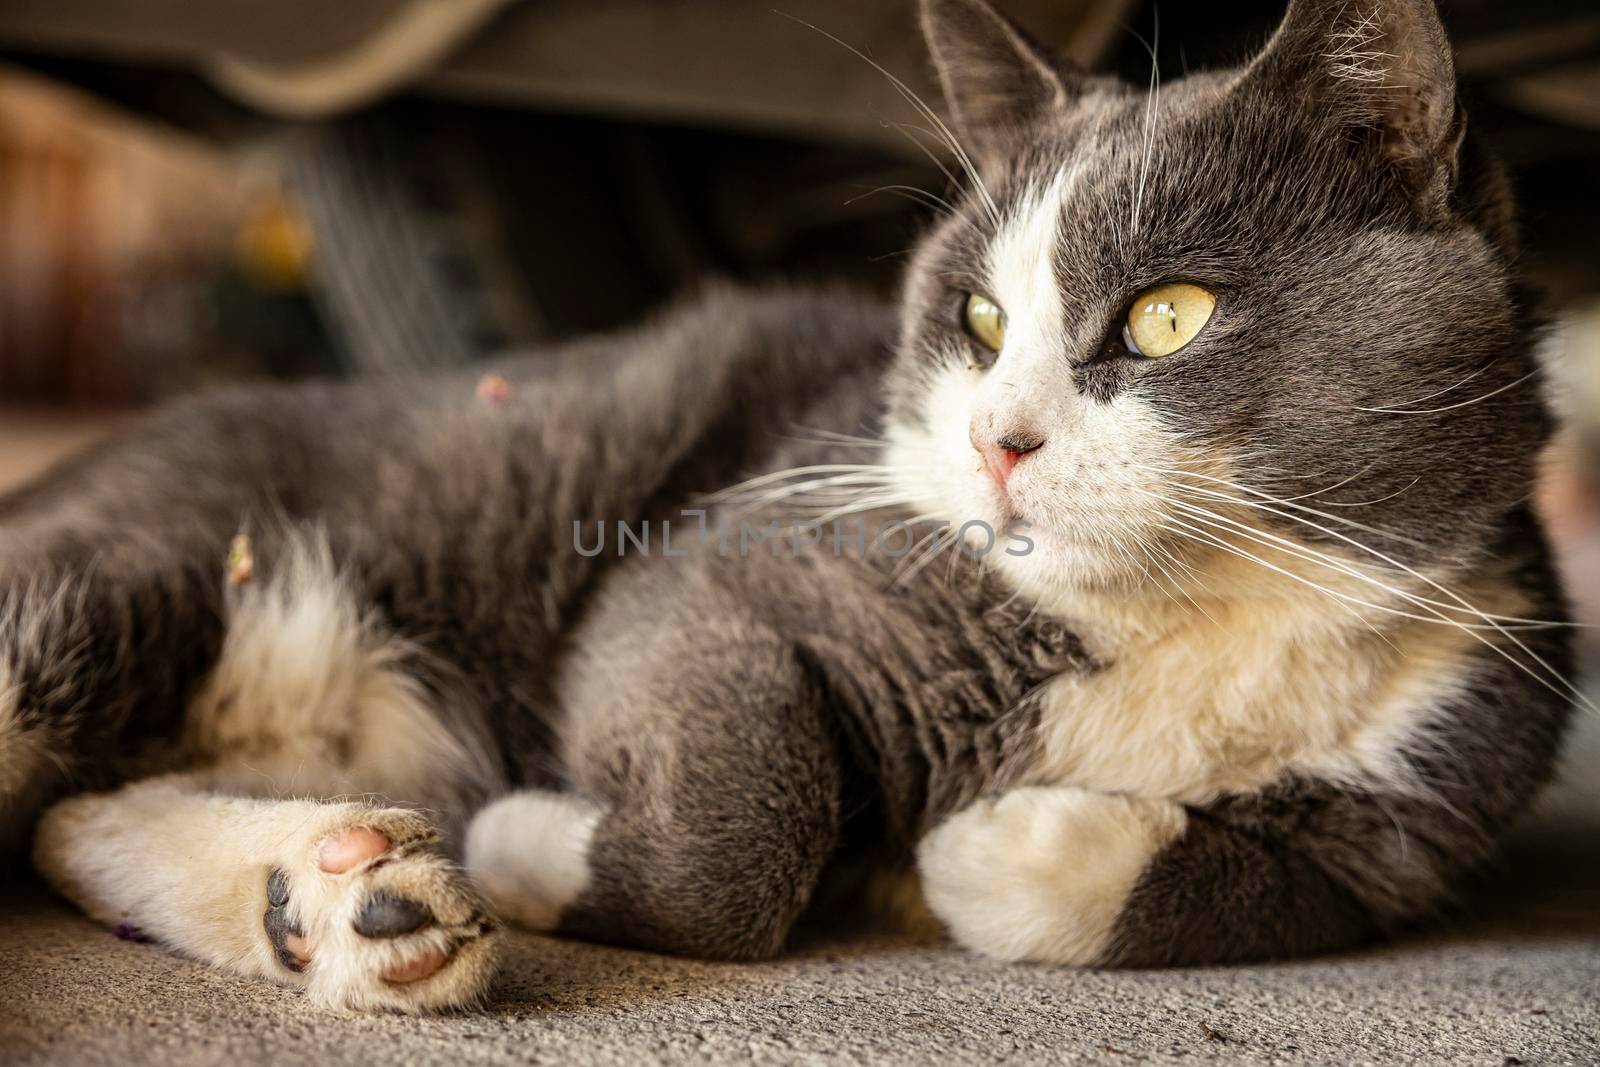 Cute Gray Domestic Cat sleep on the floor - Domestic cat portrait close up shot